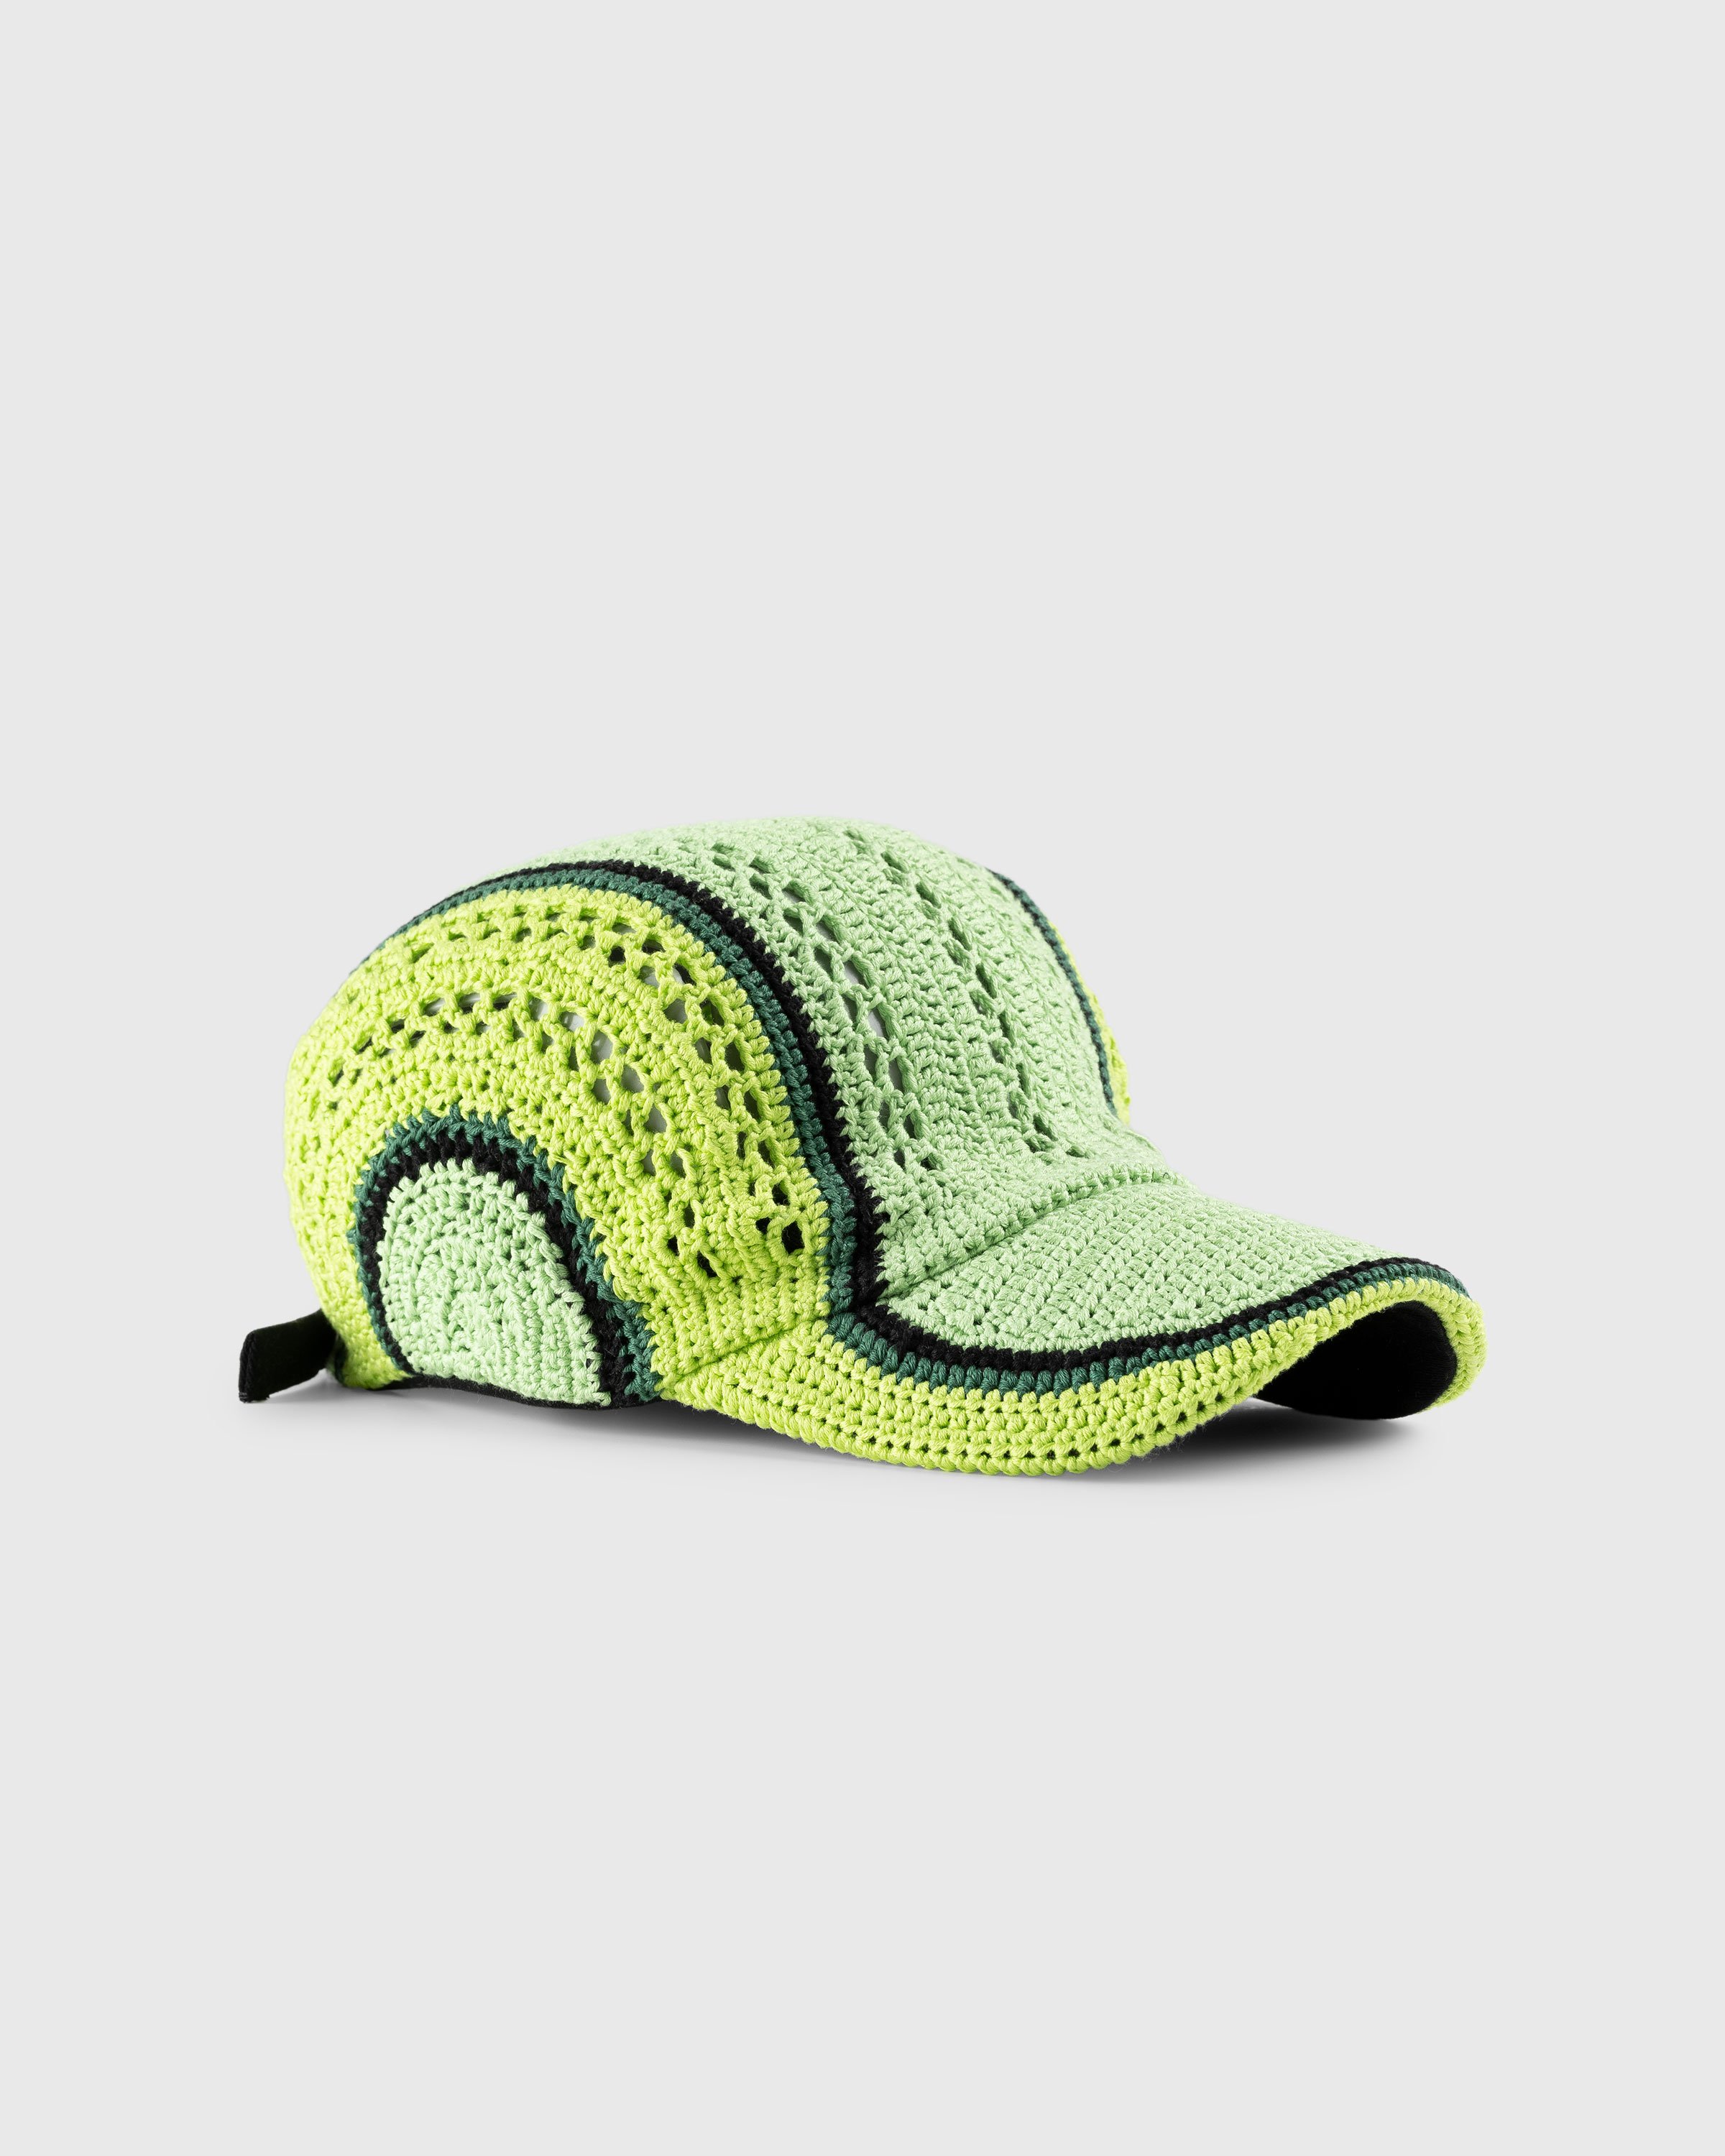 SSU - Crochet Baseball Cap Reptile Green - Accessories - Green - Image 1